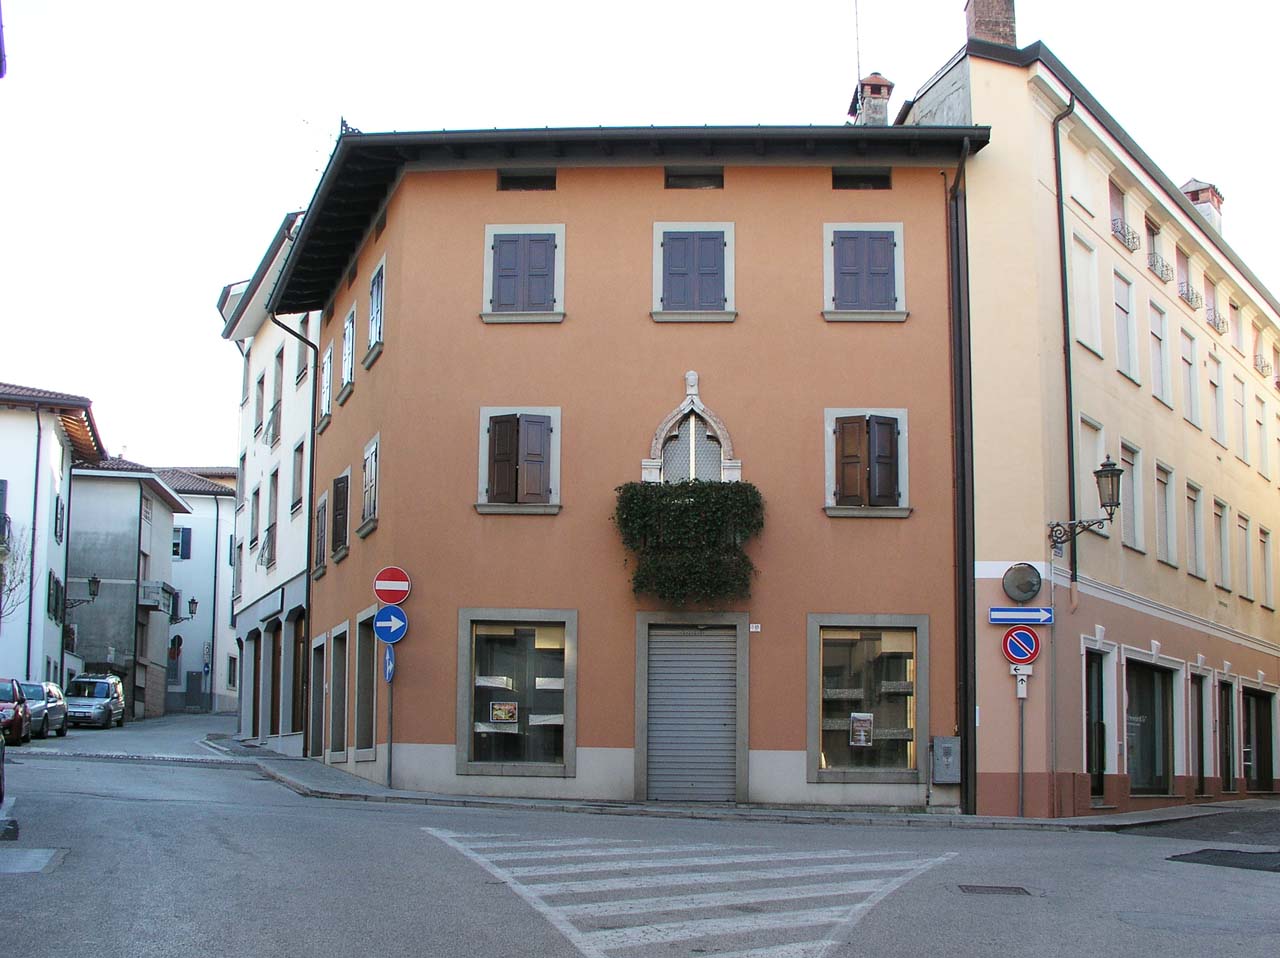 Casa Midena, Pilutti (casa, privata) - San Daniele del Friuli (UD) 